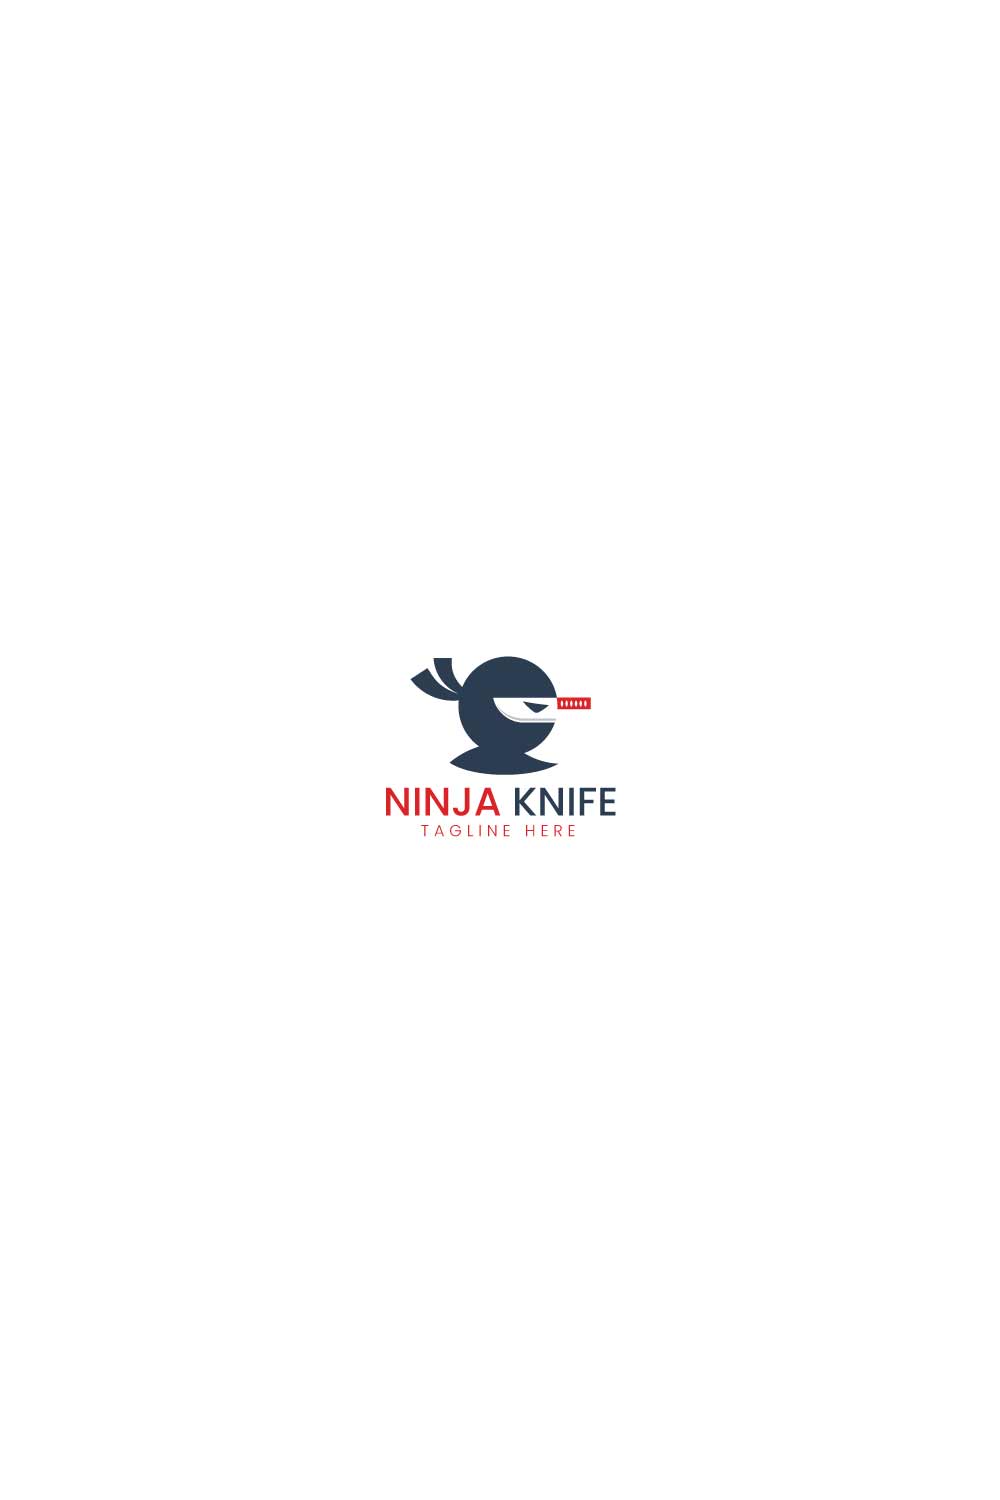 Professional ninja knife logo design pinterest preview image.